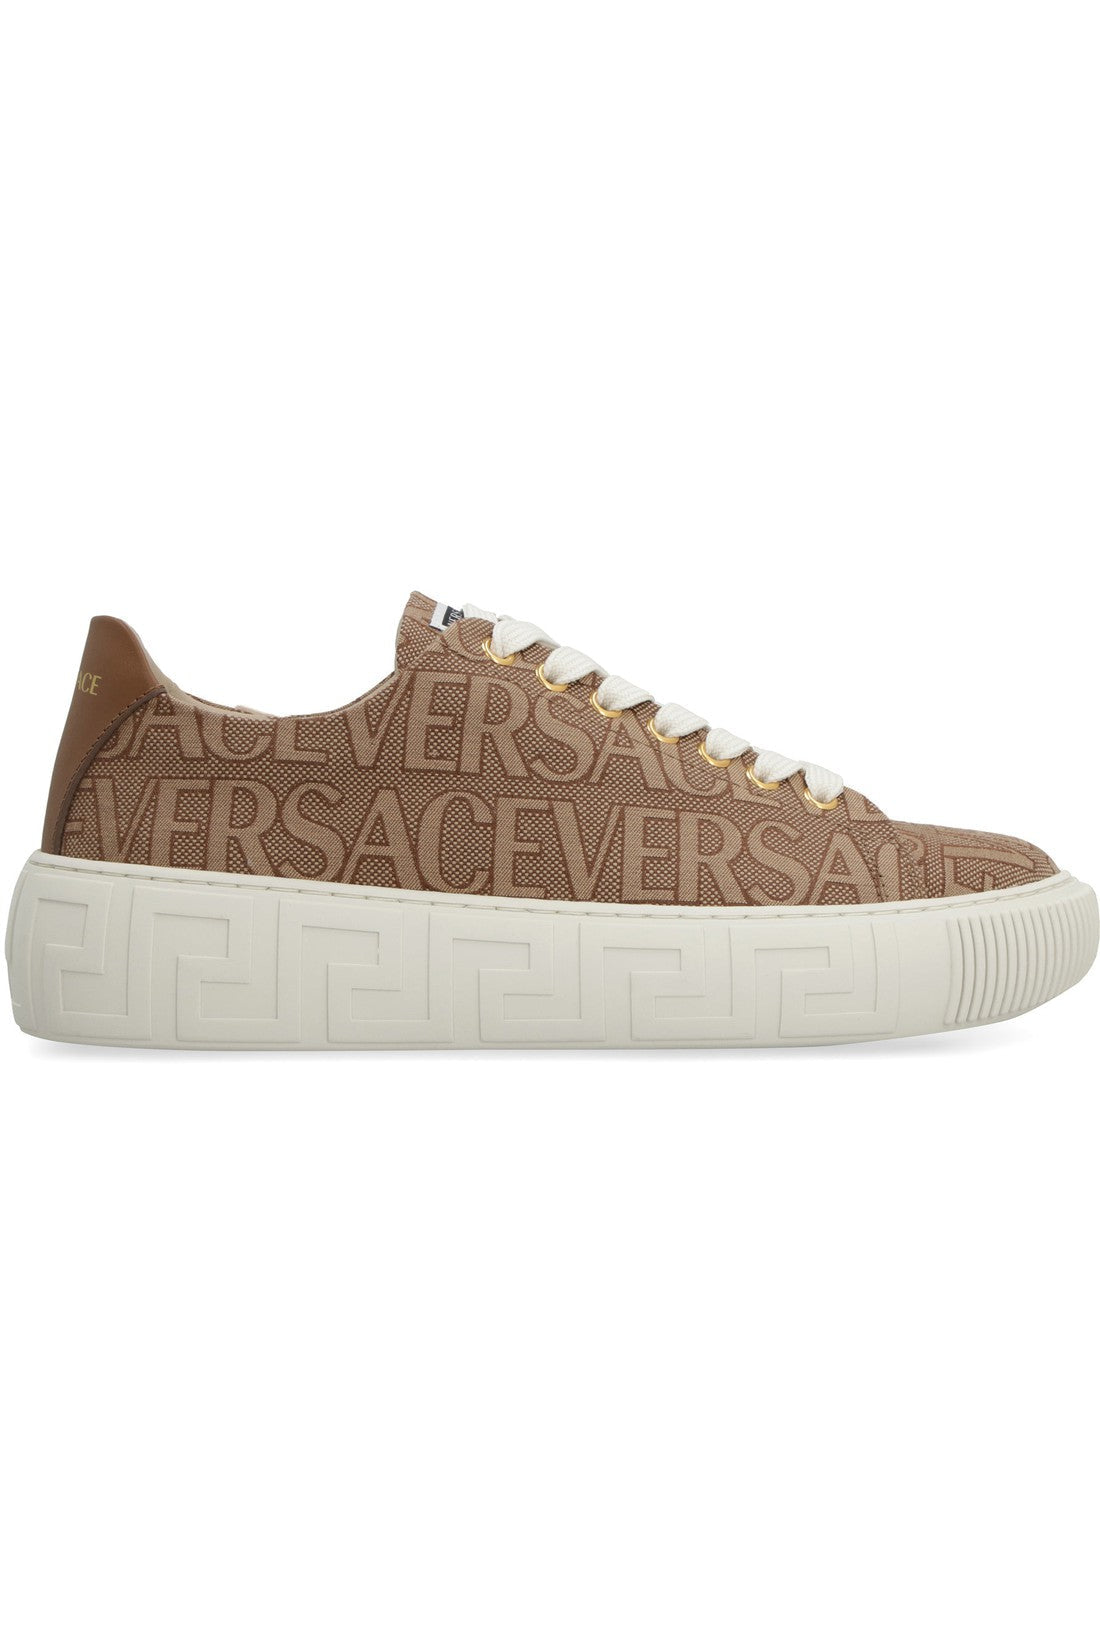 Versace-OUTLET-SALE-Greca low-top sneakers-ARCHIVIST